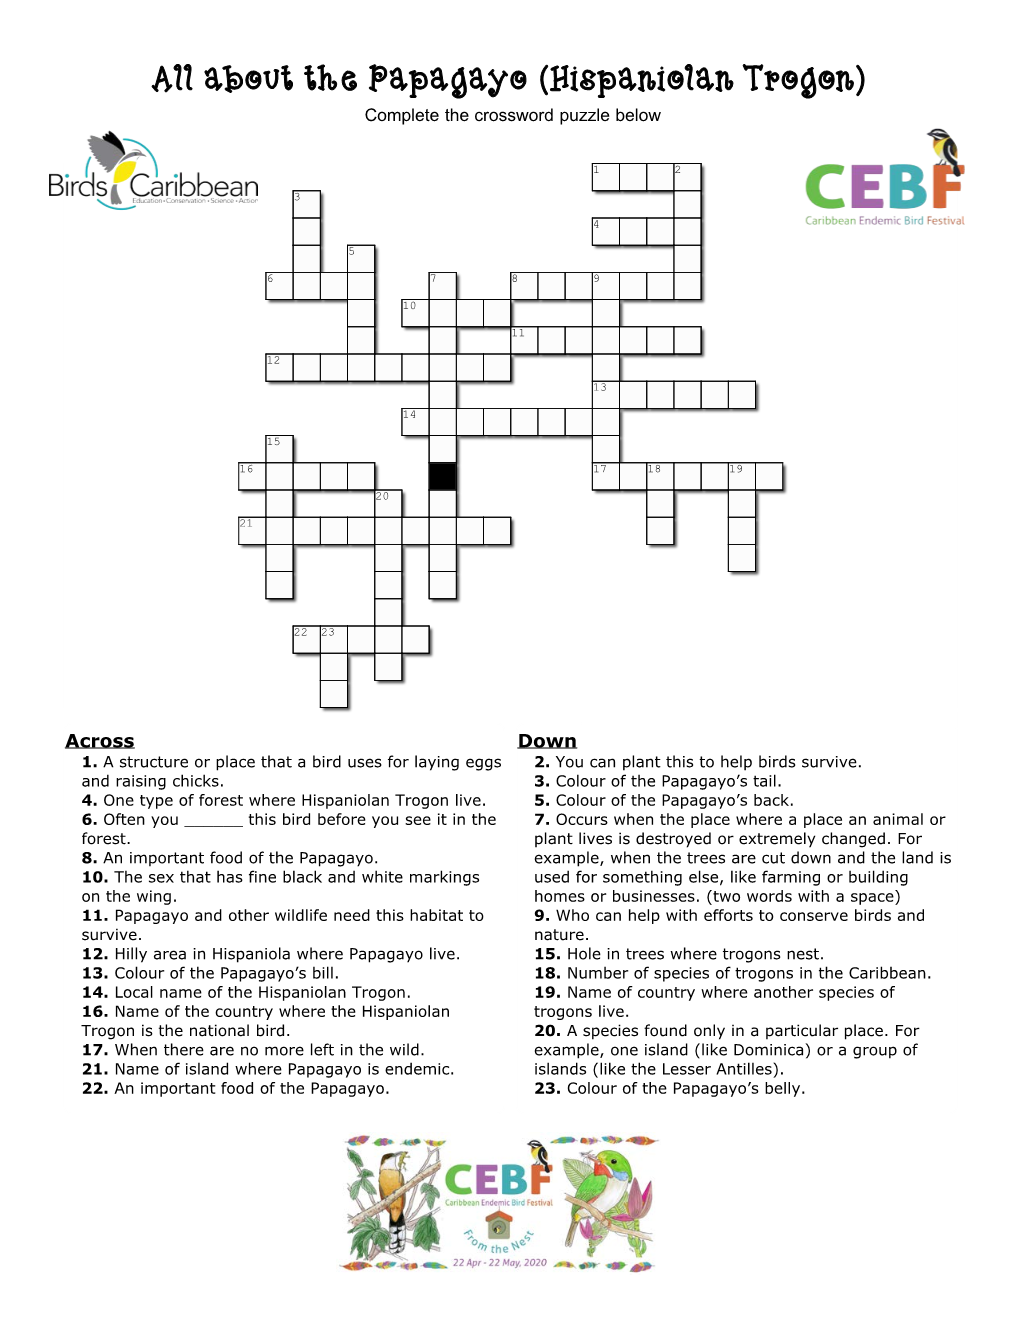 Hispaniolan Trogon) Complete the Crossword Puzzle Below